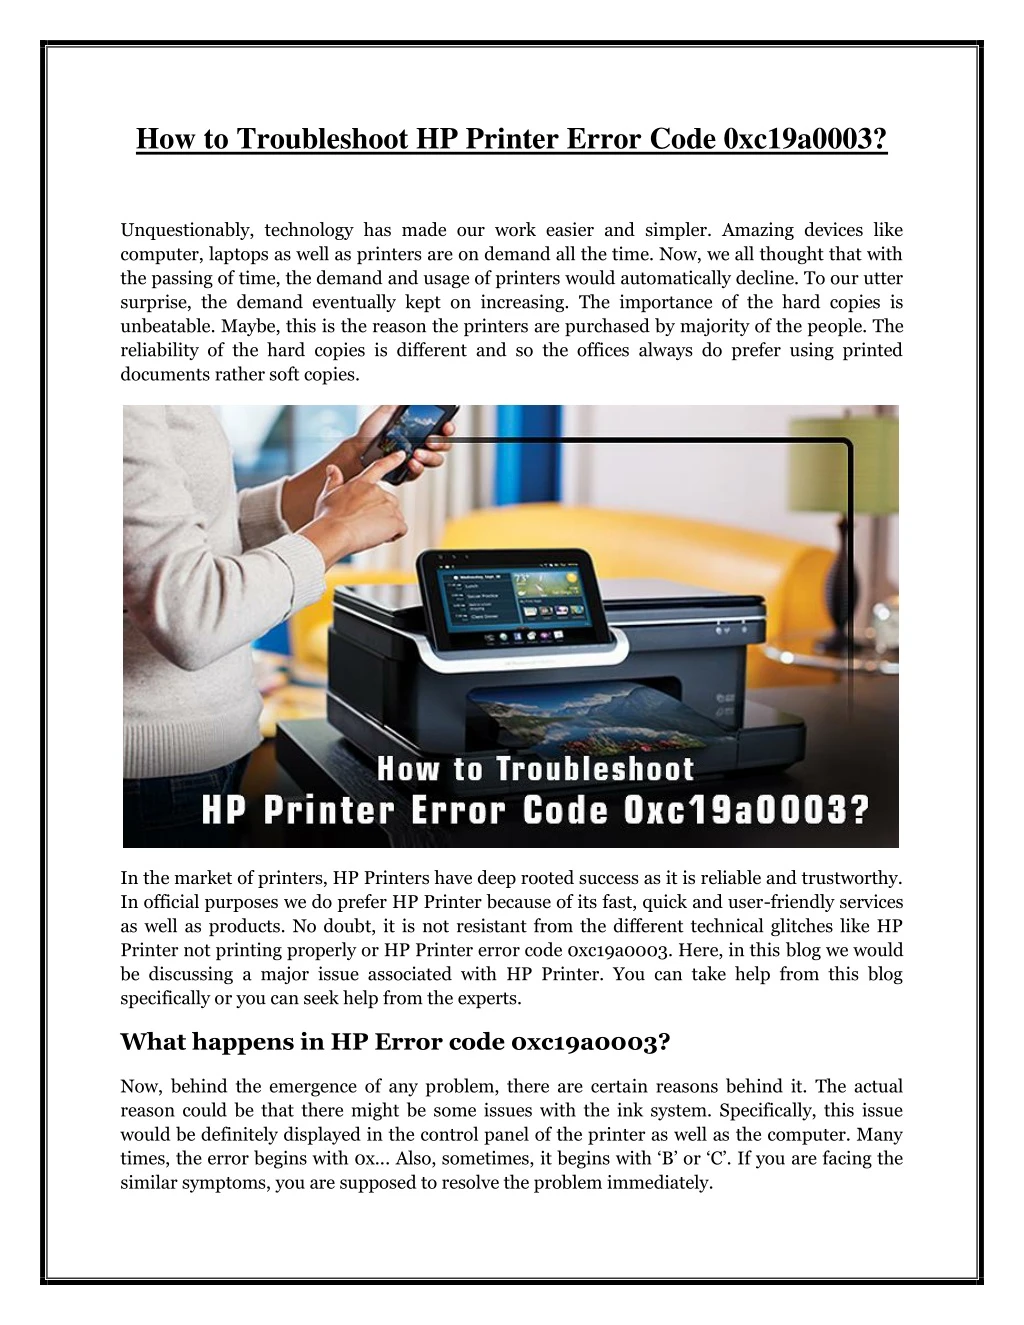 how to troubleshoot hp printer error code